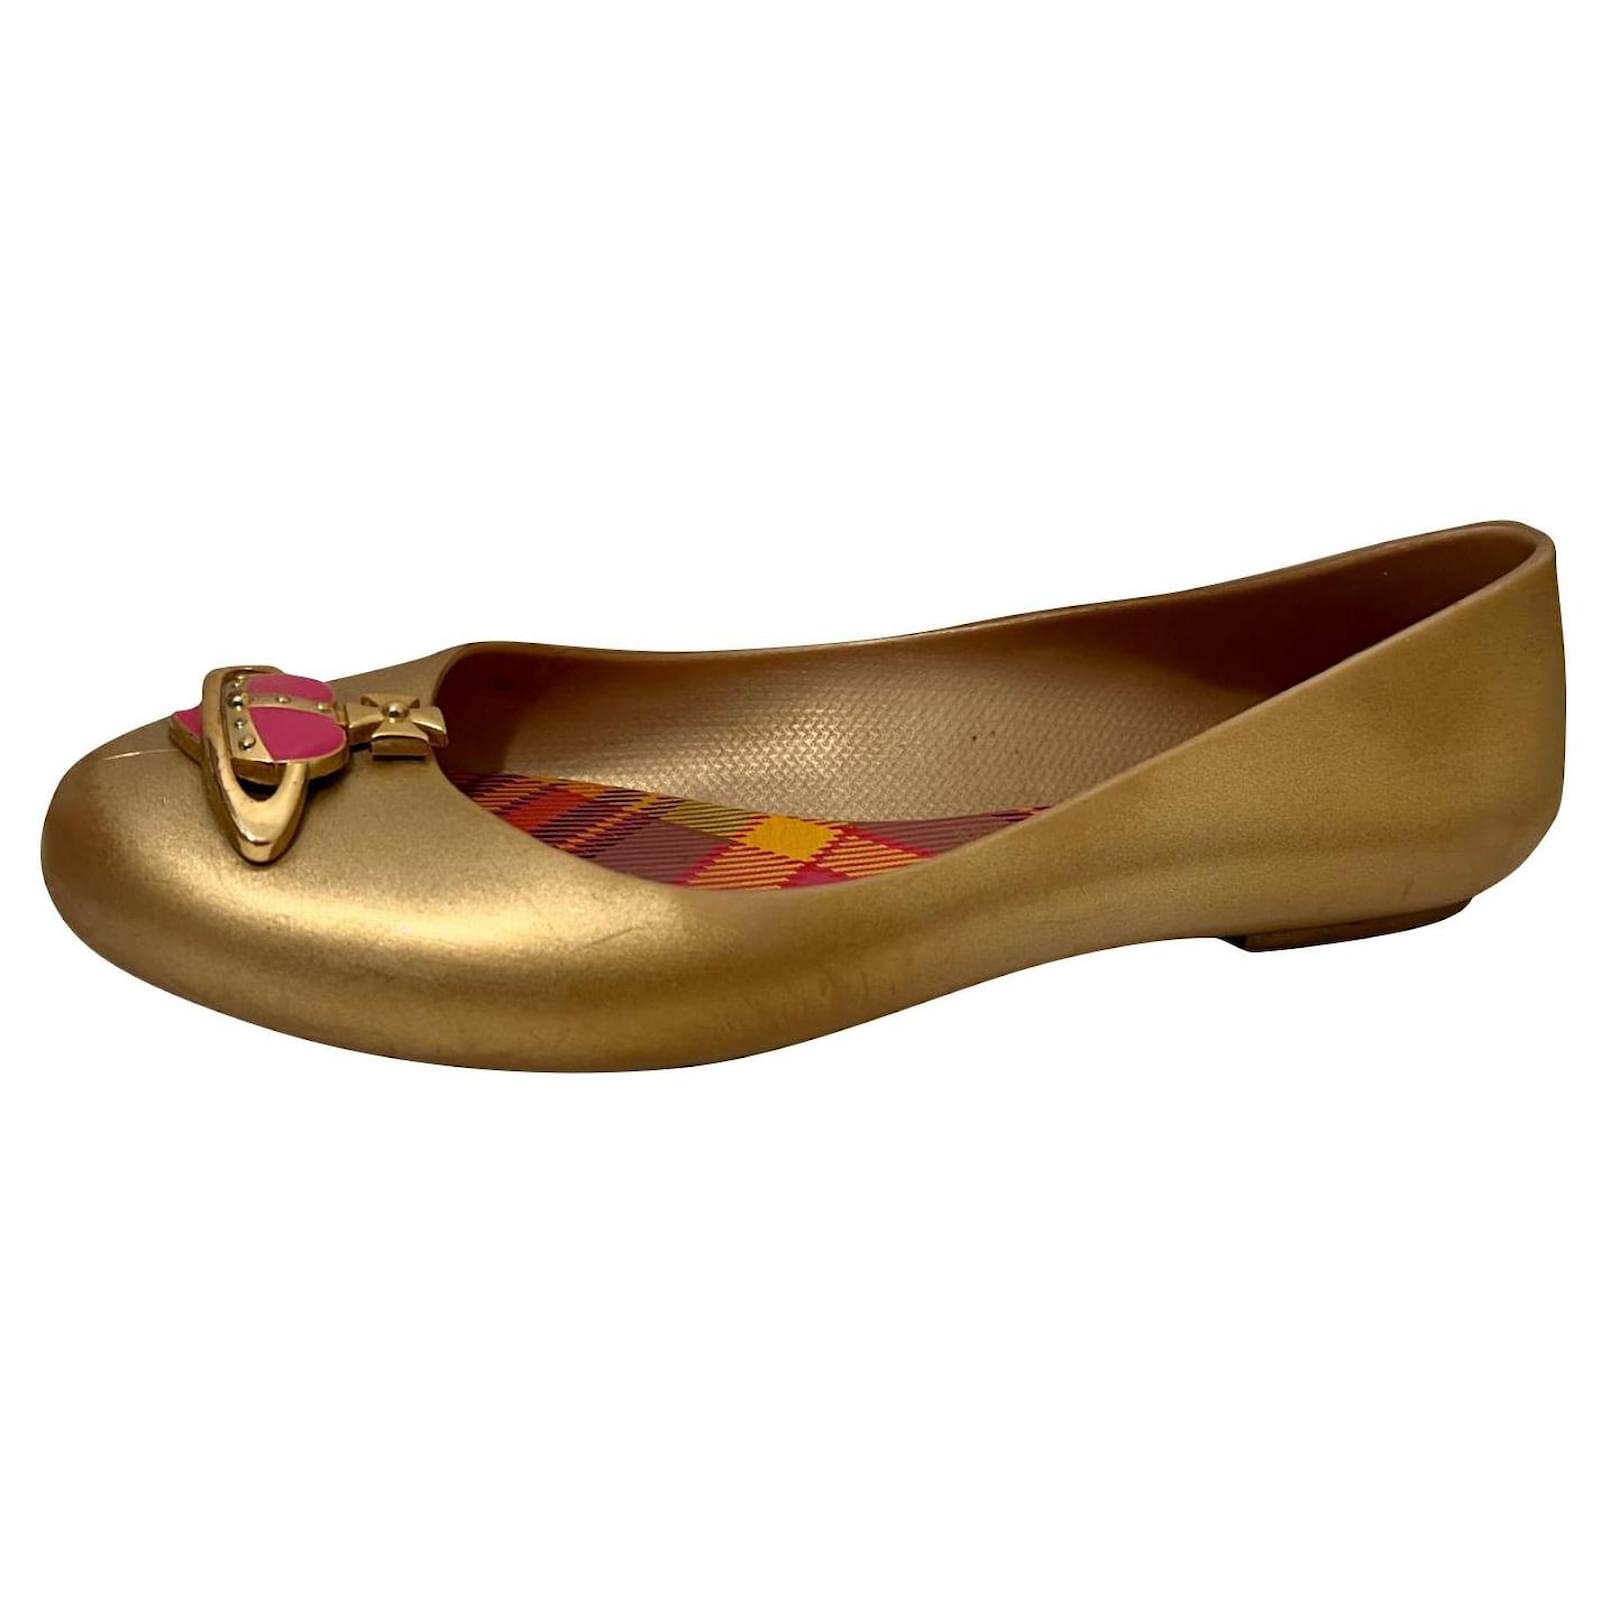 Vivienne Westwood | Shoes | Vivienne Westwood Melissa Heels Lady Dragon Gold  Hearts | Poshmark